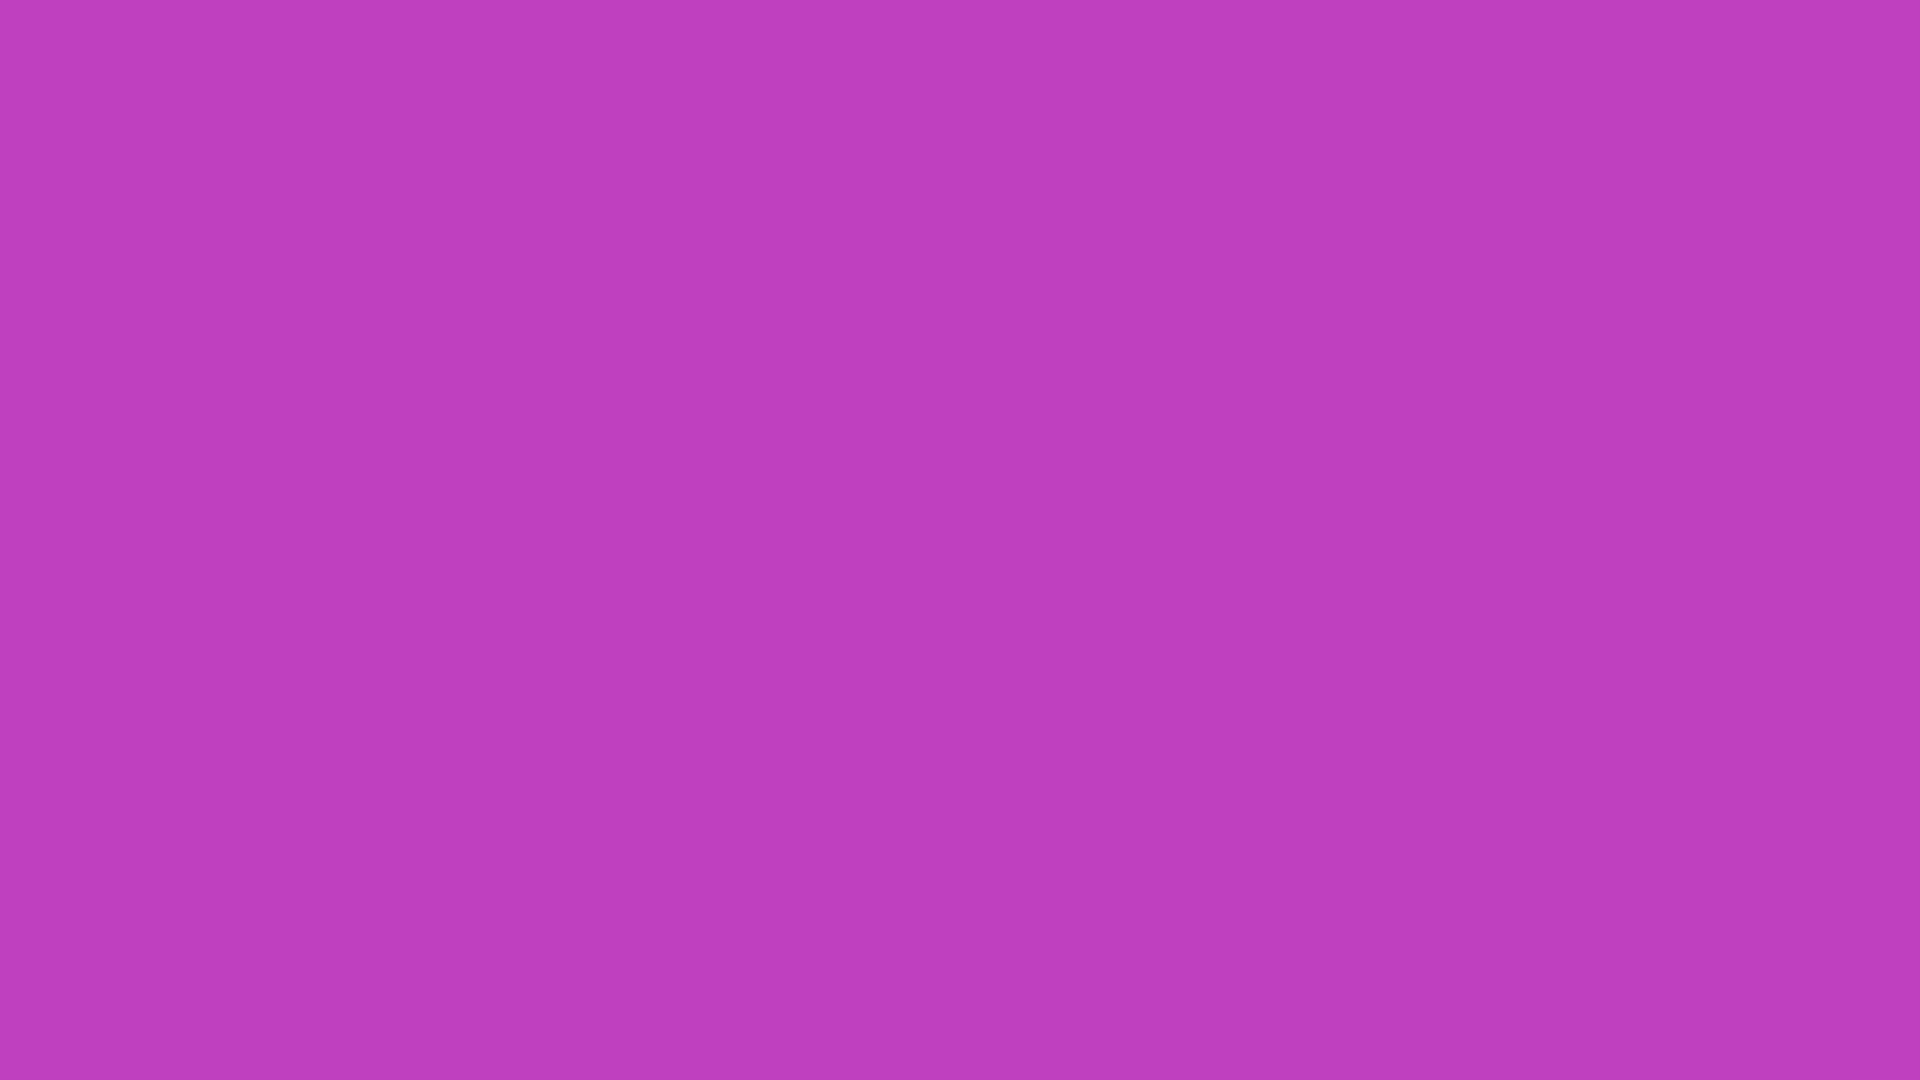 Neon Orchid Purple #b637bf color hex codes and harmonies - Bright Light  Purple, Ponderosa Purple, Shocking Purple, Bright Red Violet, Light  Lavendar, Pinkish Purple, Vibrant Purple, Peppier Purple, Dark Purple-Pink